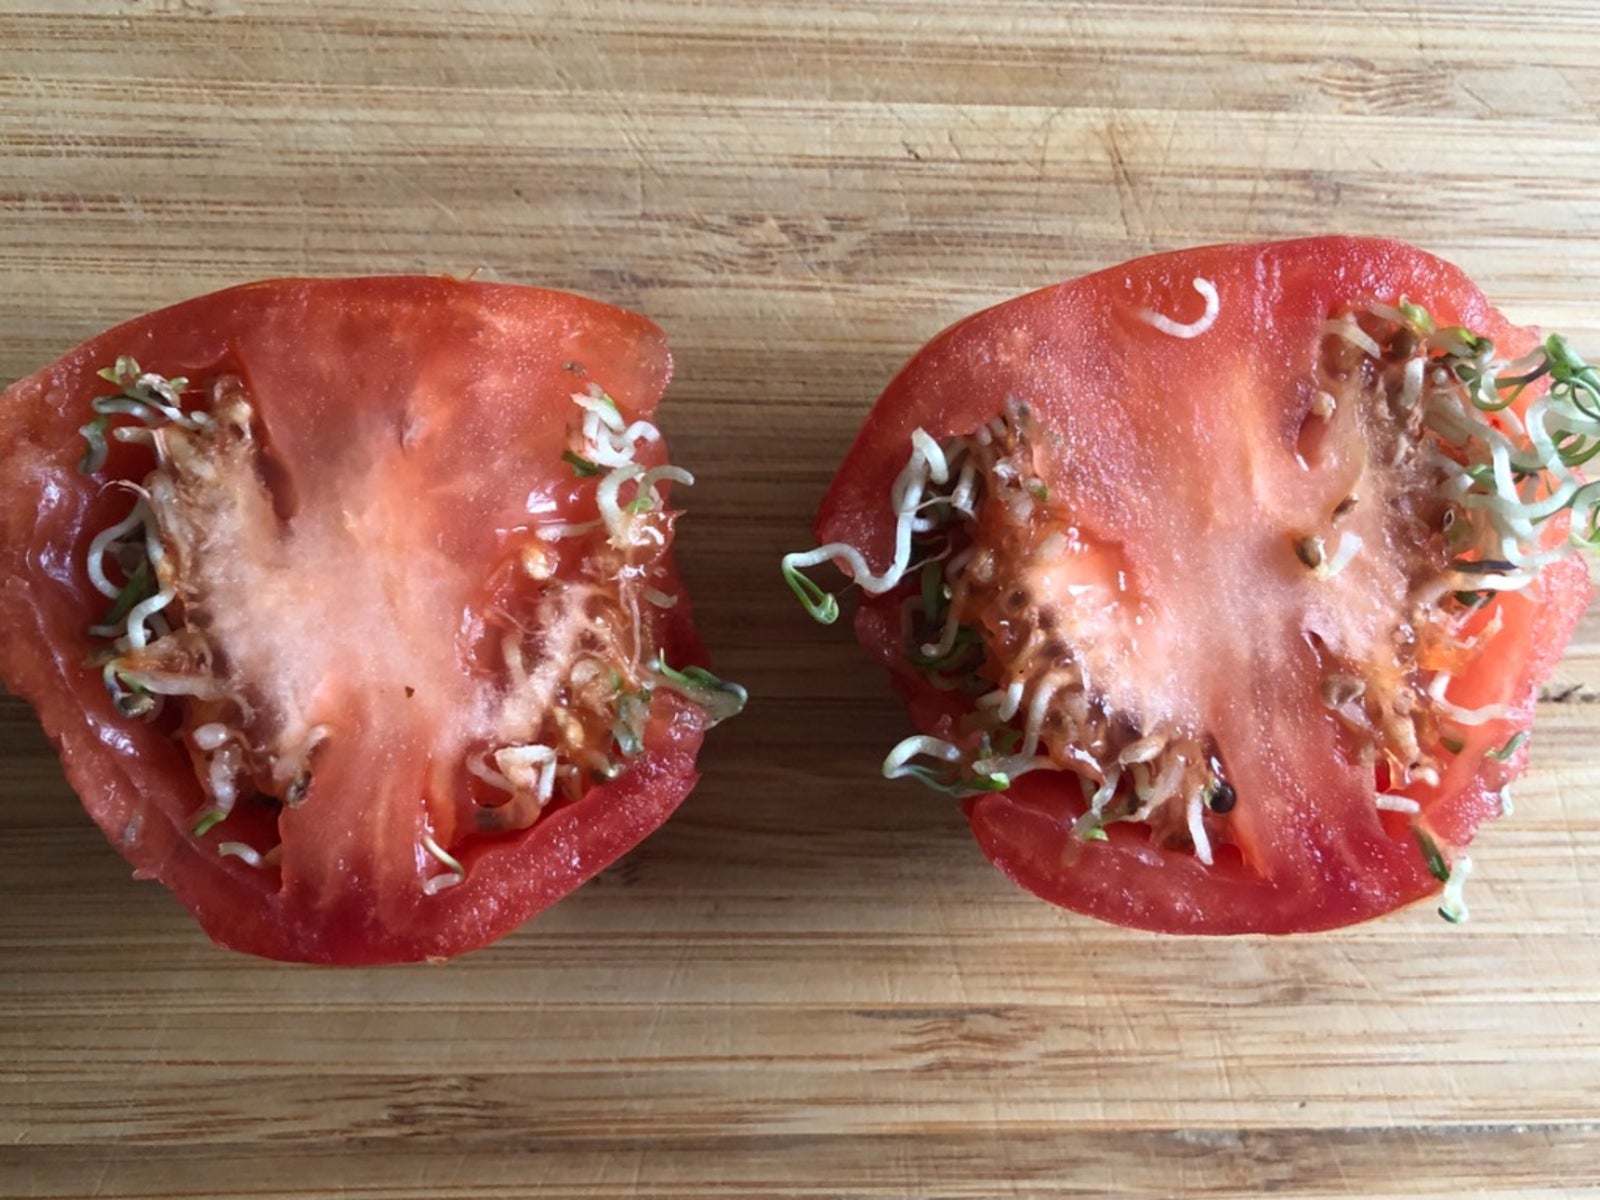 Dune rotten tomatoes. Проросший помидор. Помидор пророс в помидоре. Фото проросших томатов. Vivipary.